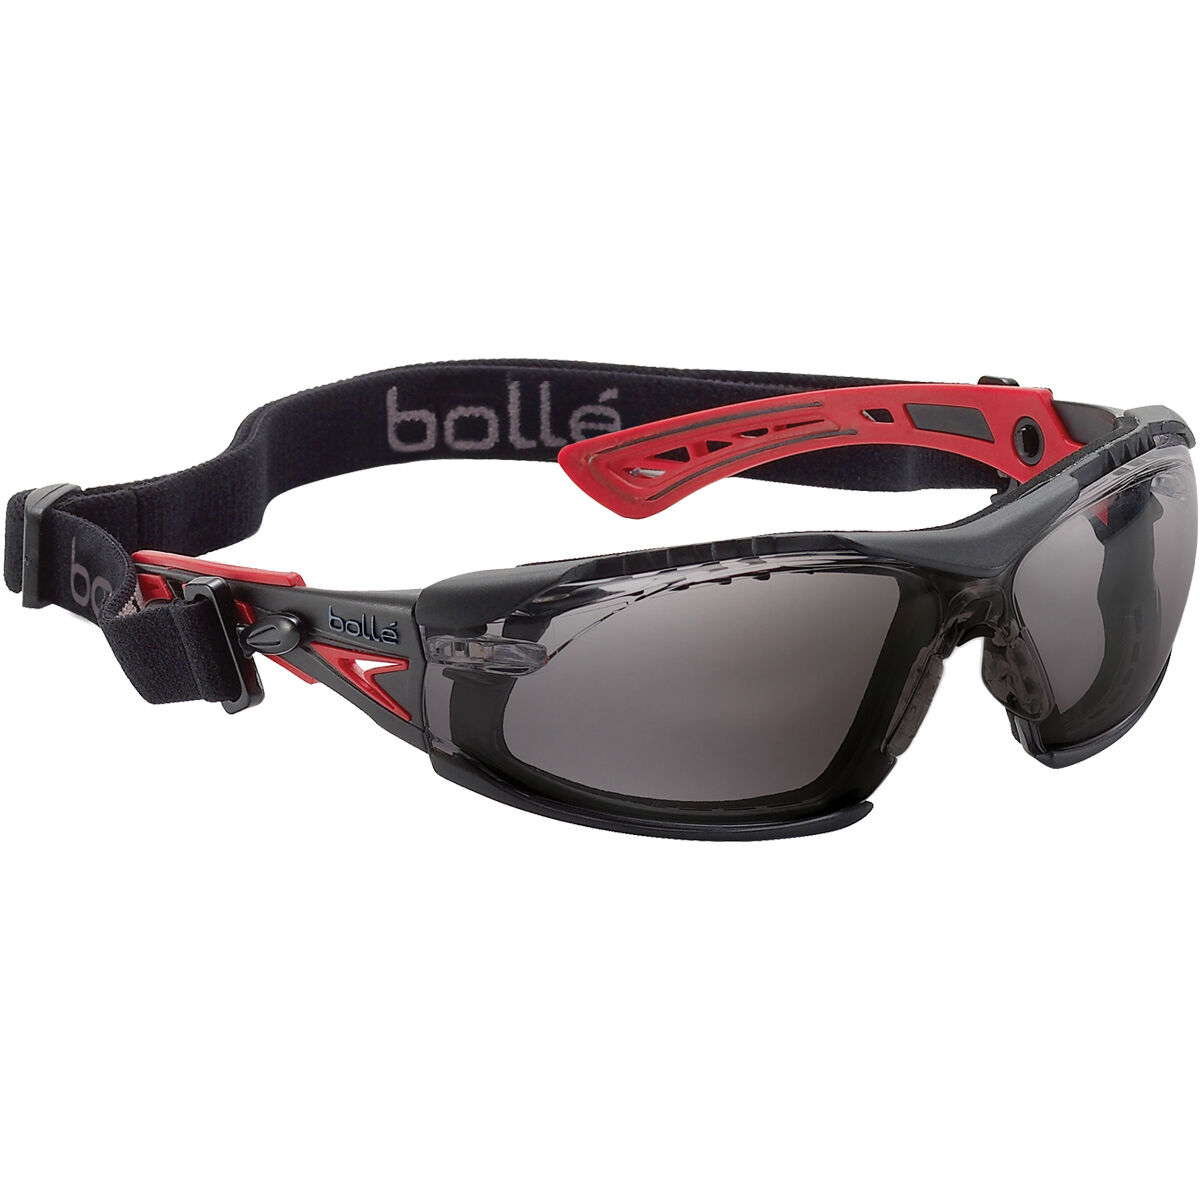 RUSHPPSF Bolle RUSH+ Safety Glasses Smoke Lens x 2 Pairs UV Eye Protection 